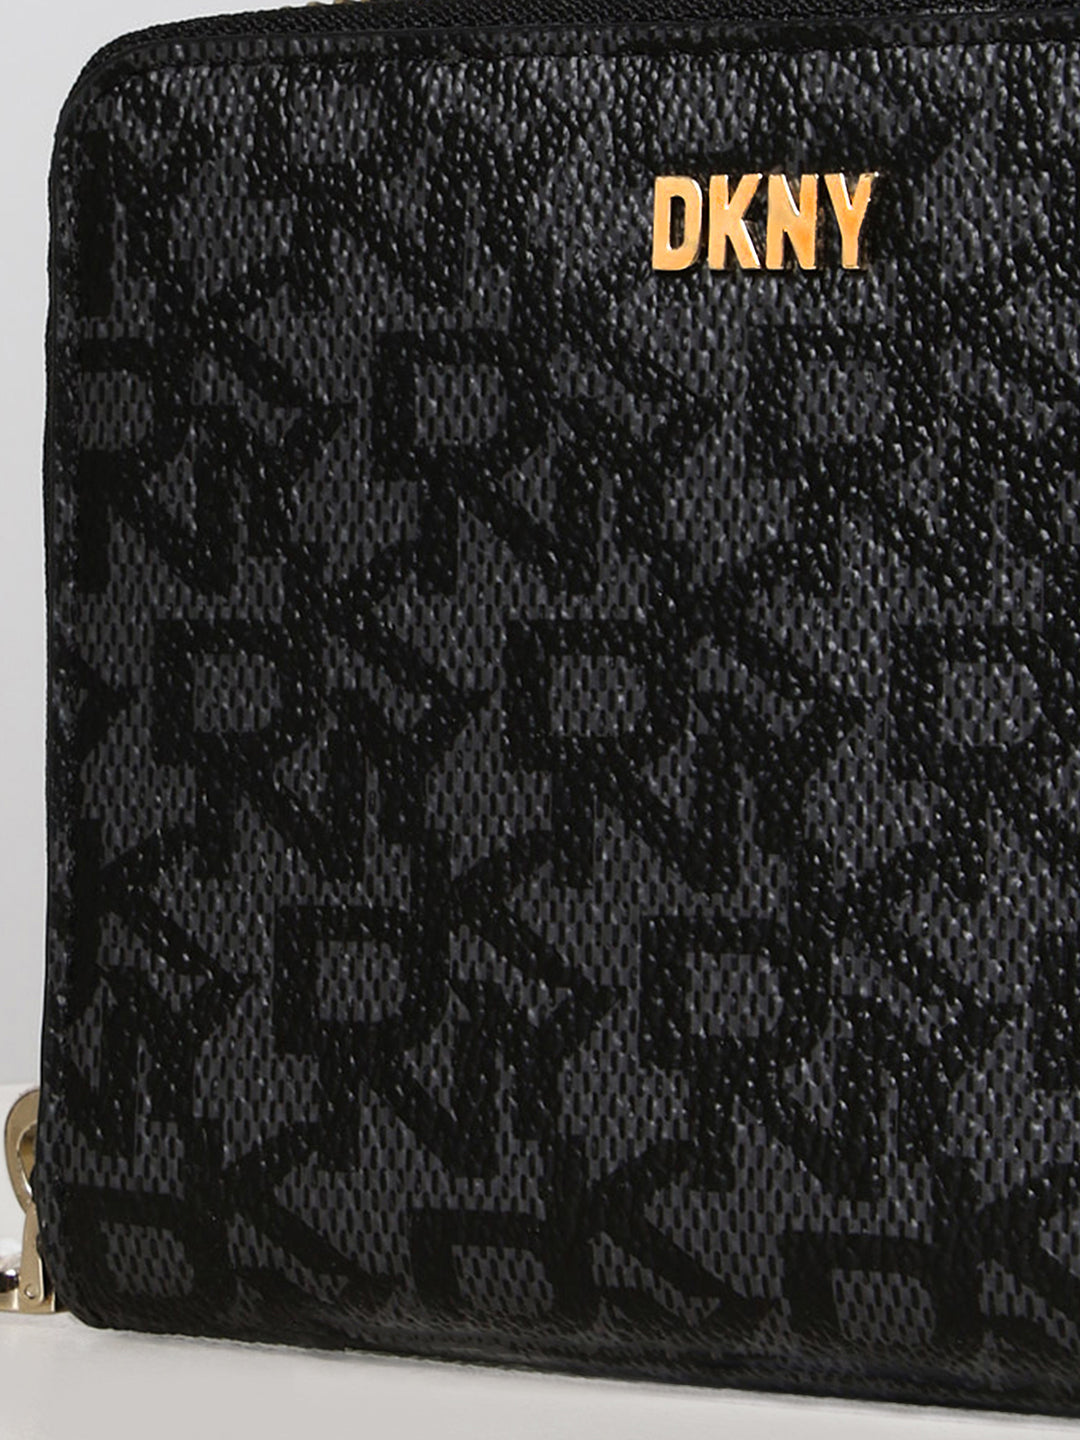 DKNY Top Handle Peppa Th Xbody Saf Black Handbag Mini Purse Classical Style  Bag - Etsy Israel